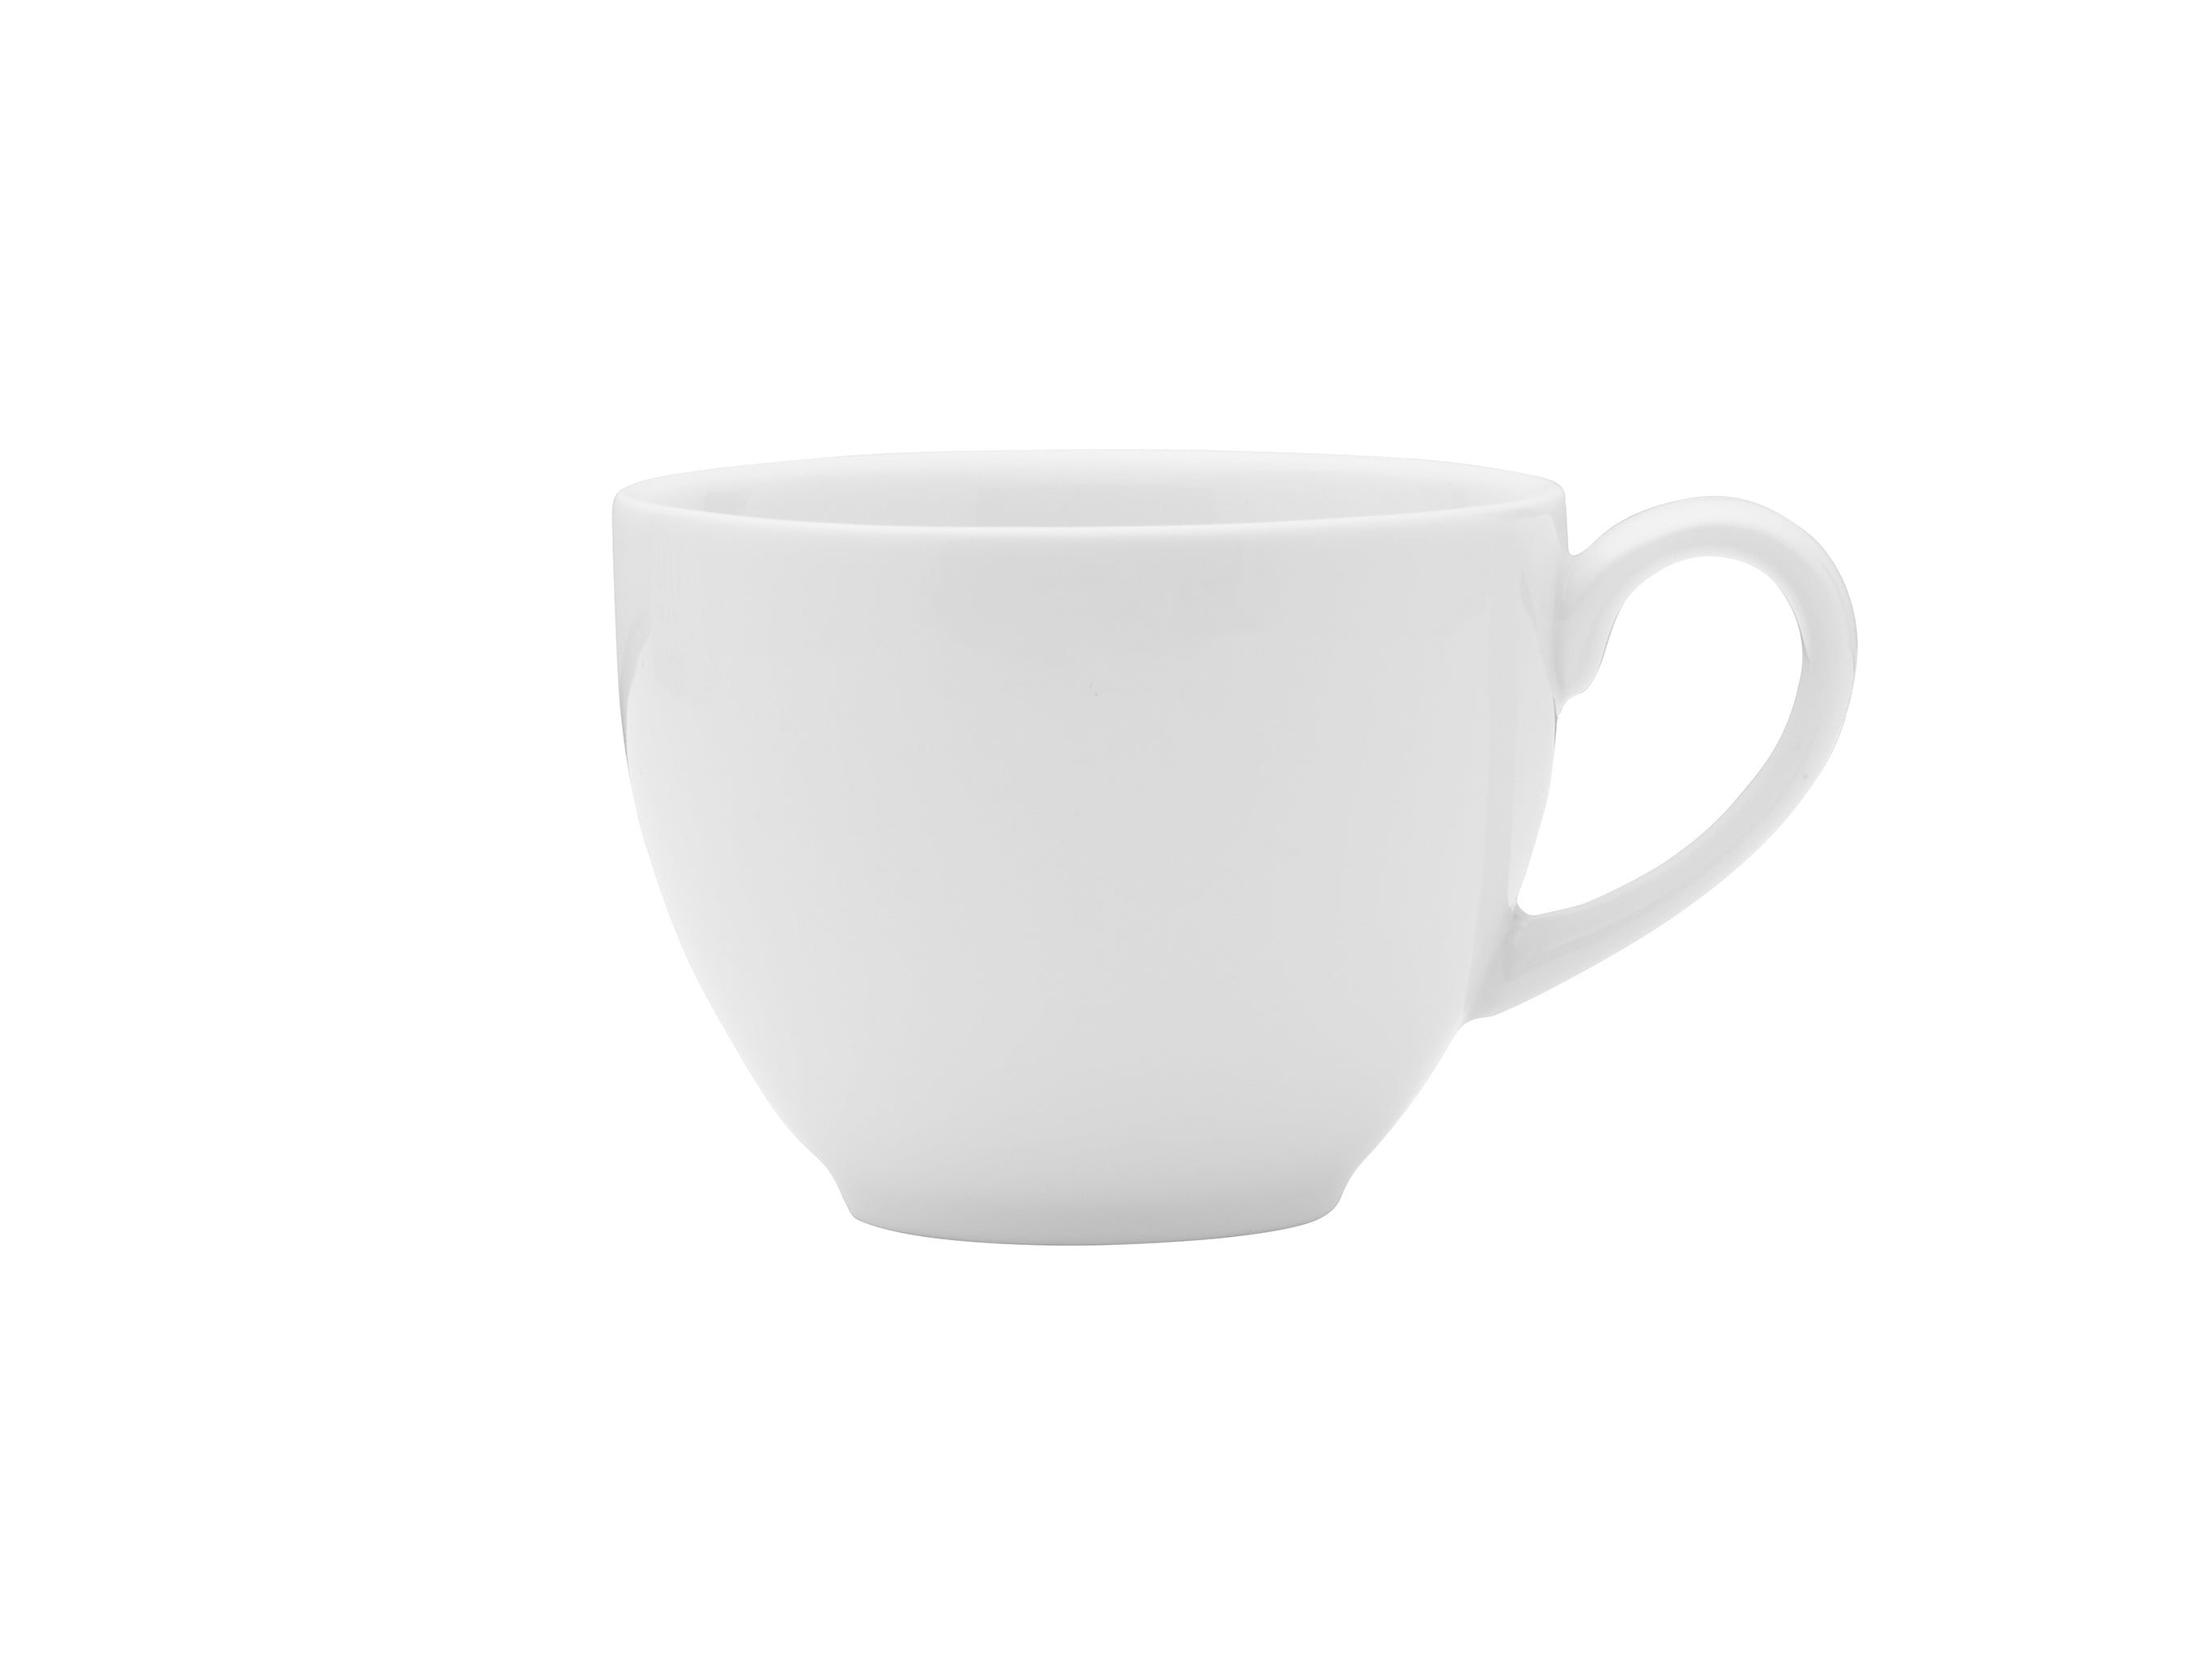 Galleria Porcelain Cup 4.5" / 6.7oz White